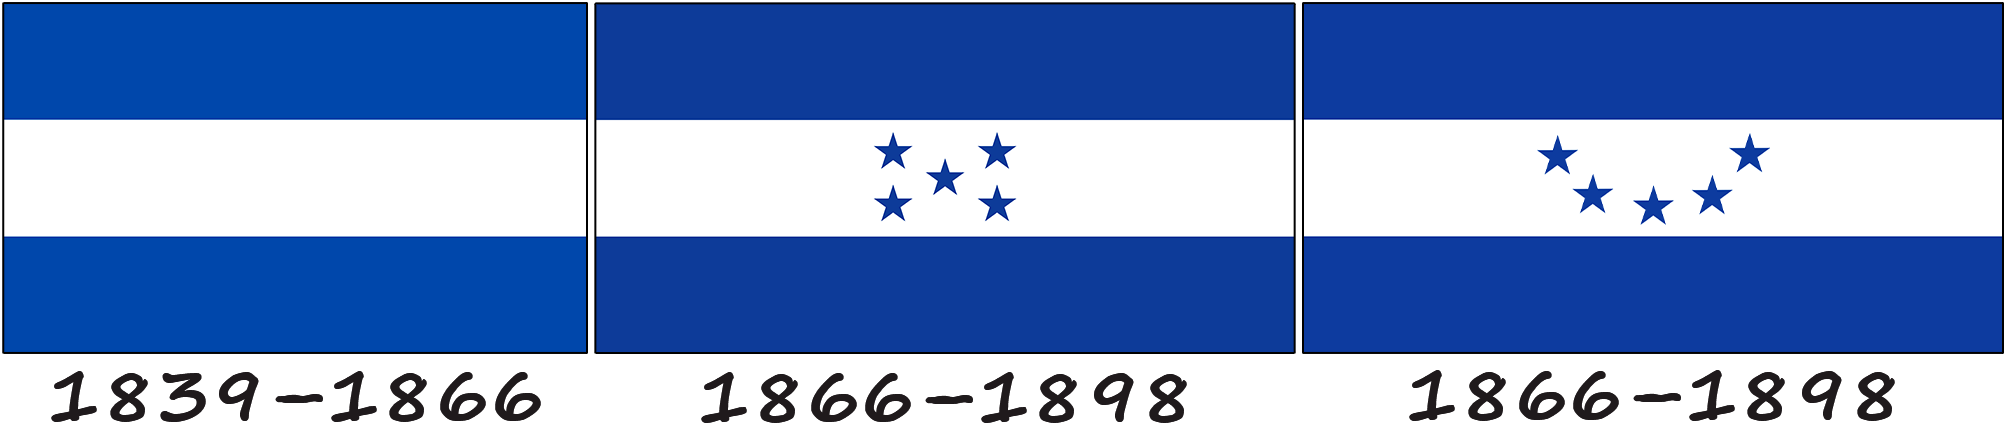 History of the Honduran flag